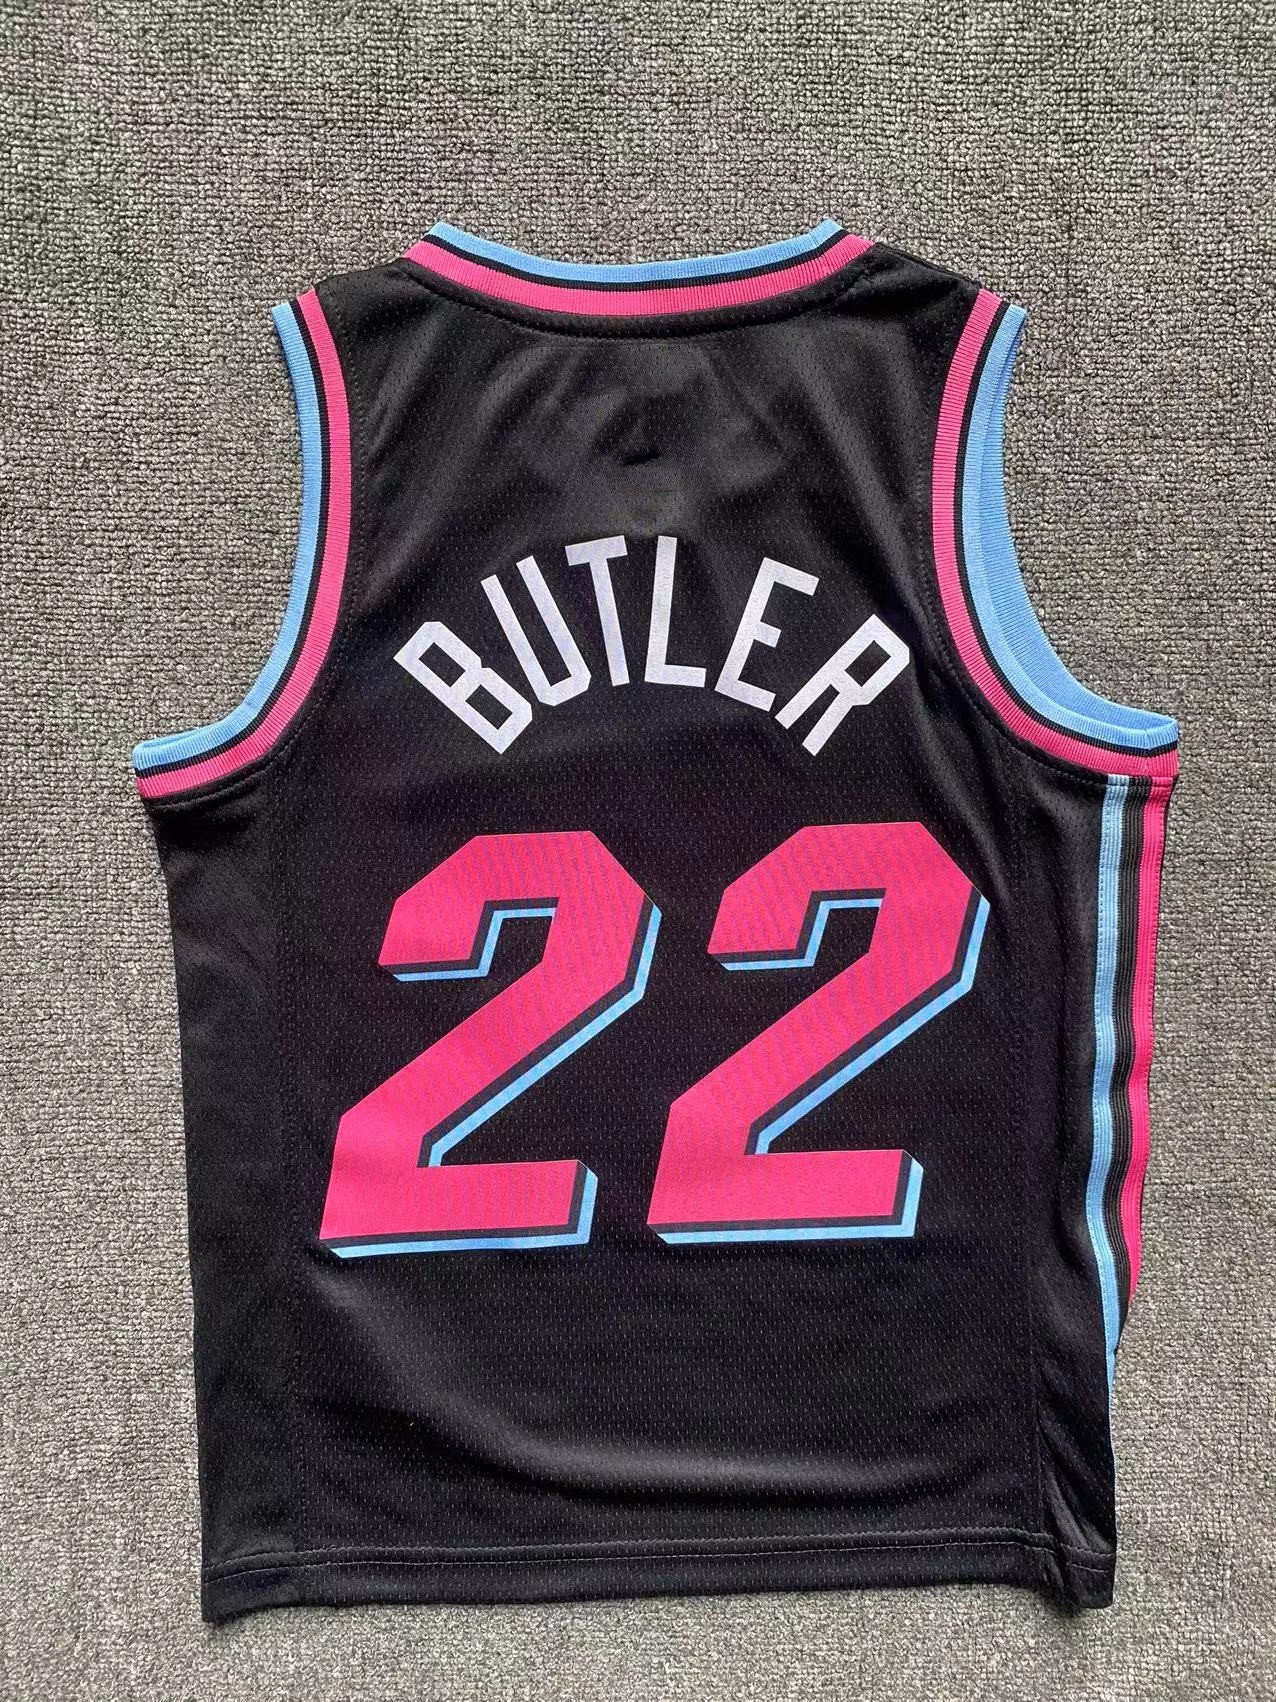 New Nike NBA Jimmy Butler Miami Heat Jersey Vice India